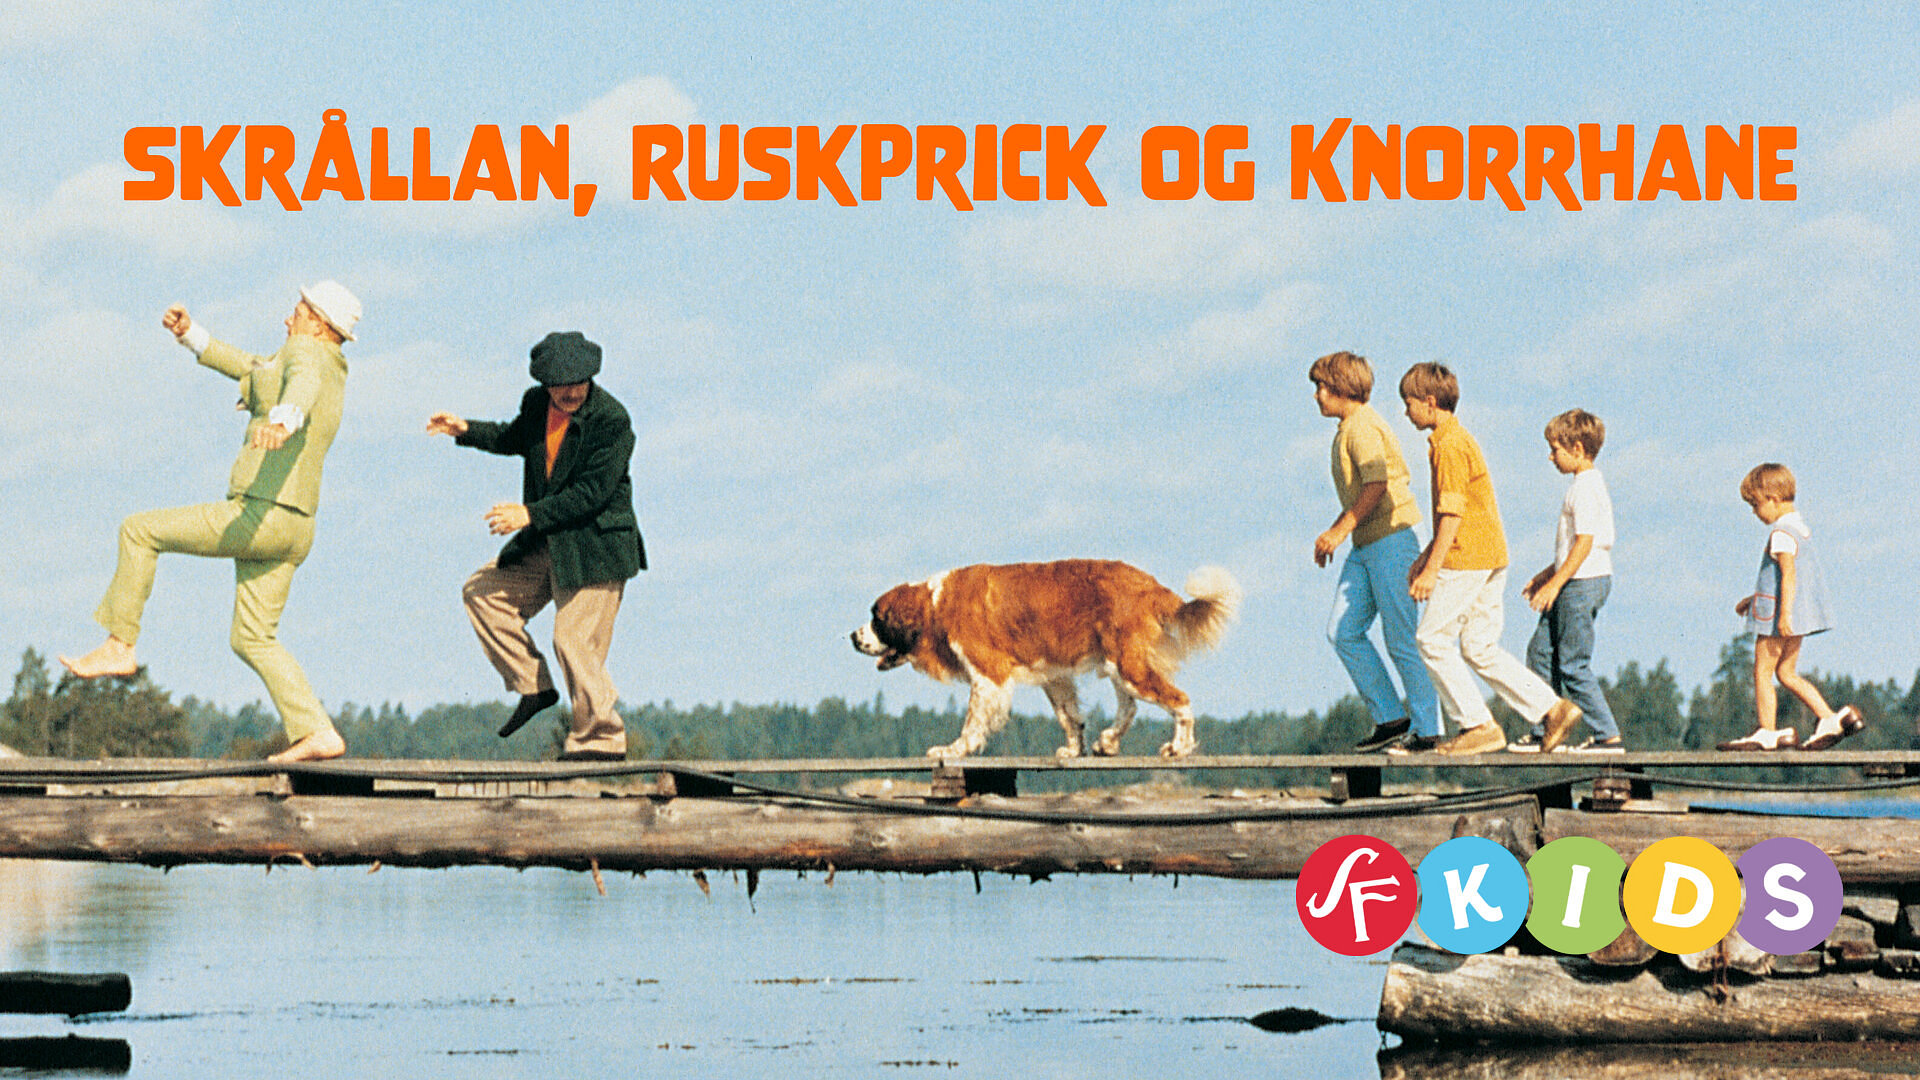 Skrållan, Ruskprick og Knorrhane